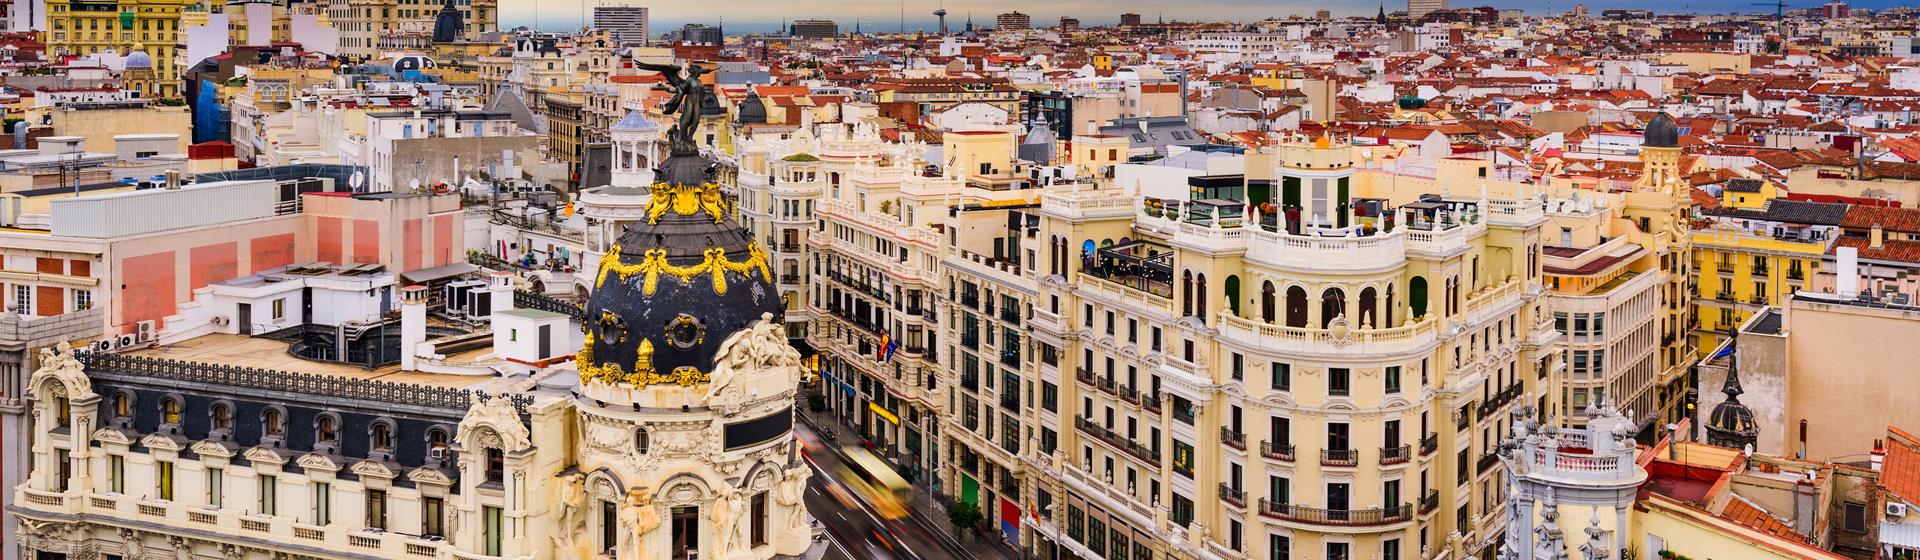 Holidays & City Breaks to Madrid